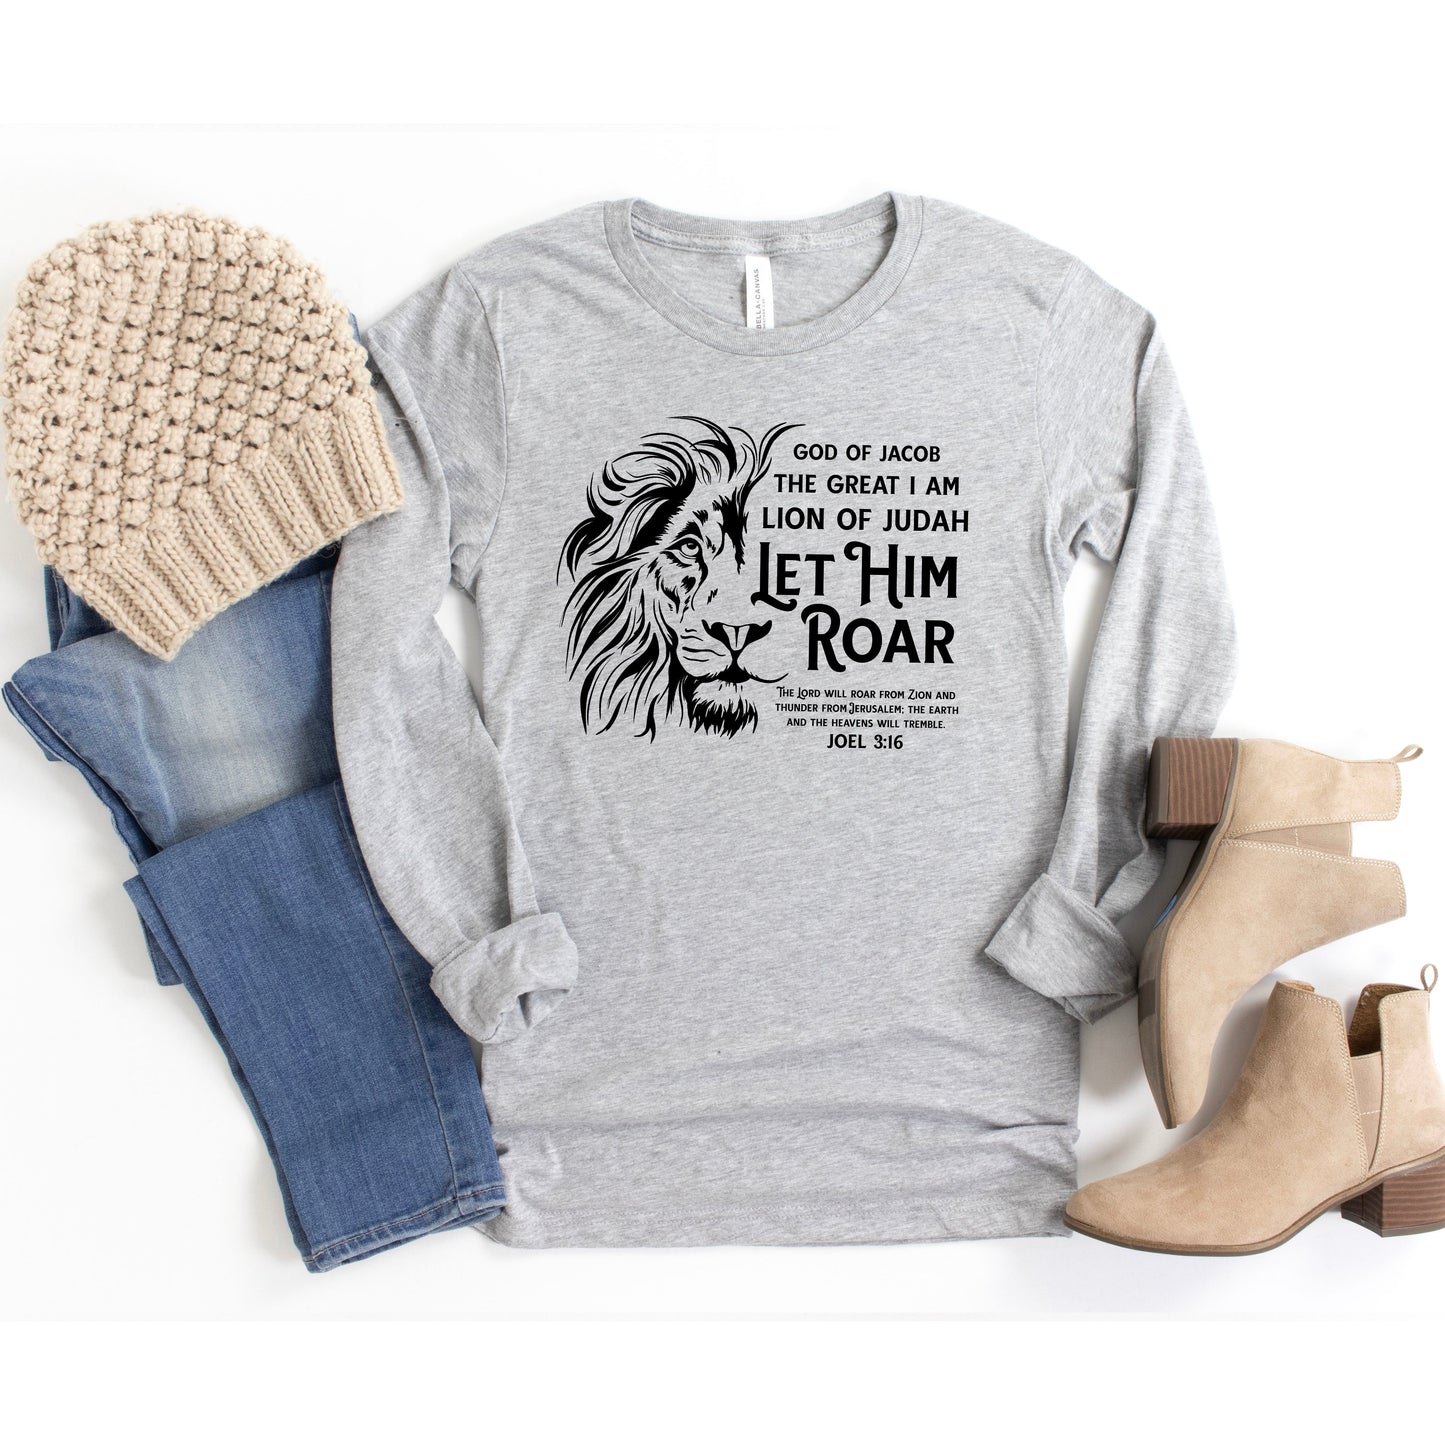 Let Him Roar | Long Sleeved Unisex Shirt!